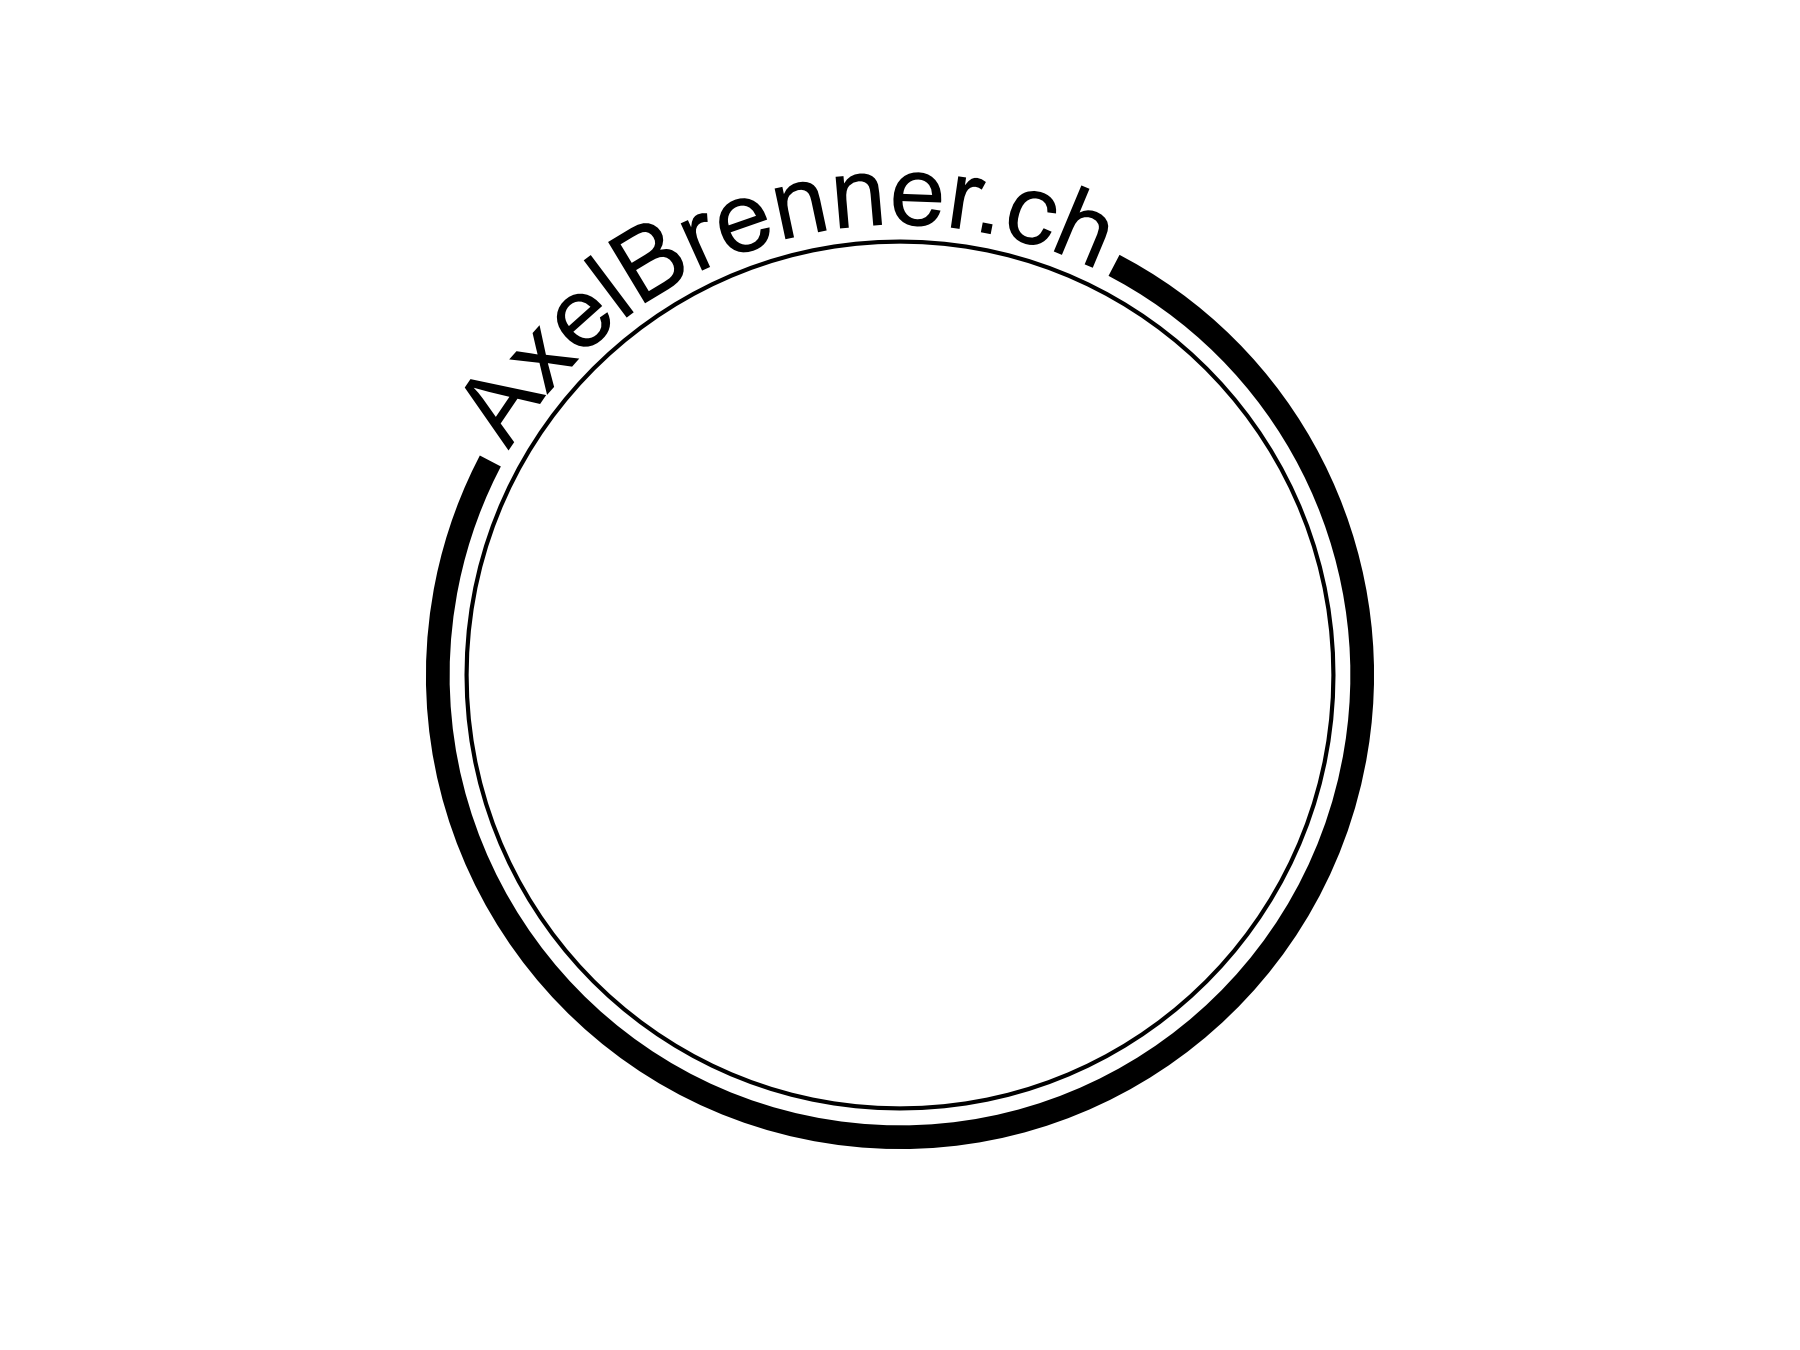 axelbrenner.ch